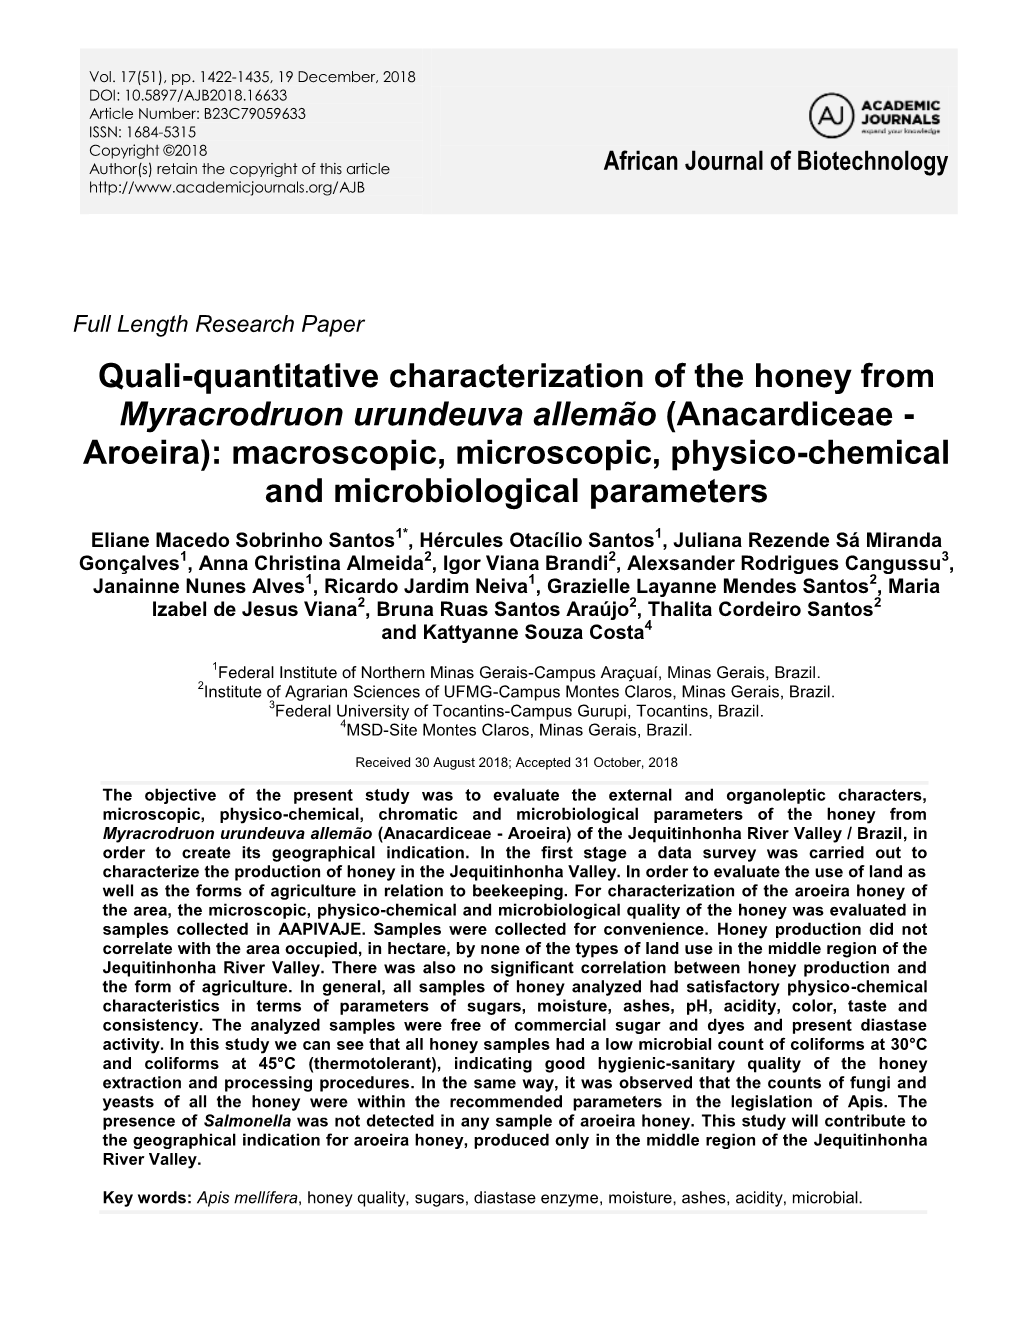 Quali-Quantitative Characterization of the Honey From